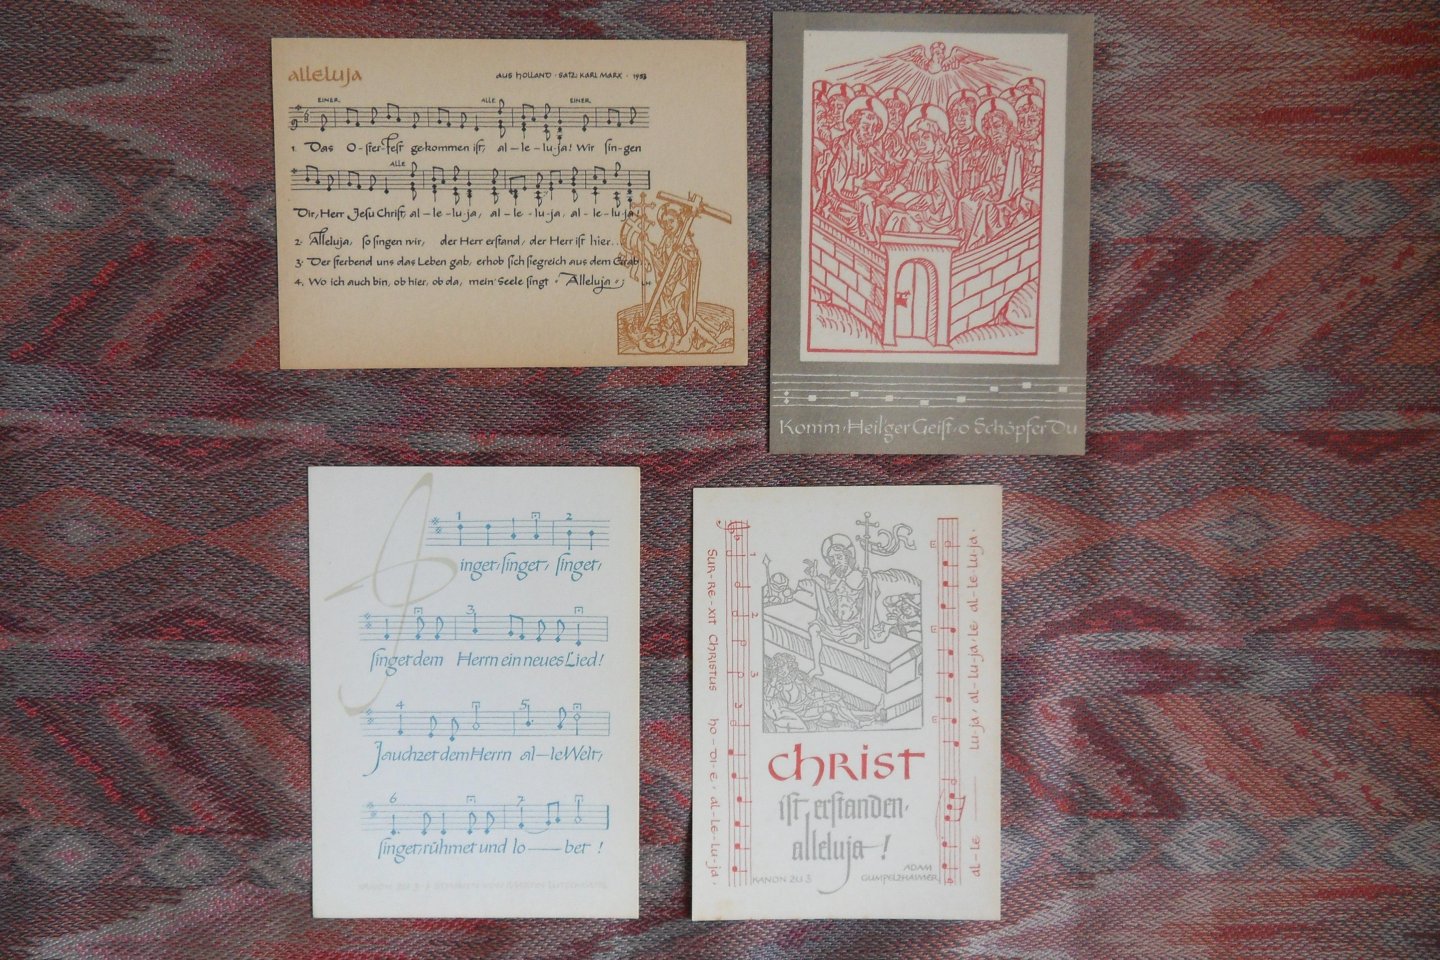 Gnadenquell (bron van herkomst teksten). - Liedpostkarten für die Oster- und Pfingstzeit. [ mapje bevat acht losse kaarten met muzieknotatie en grafische afbeelding].